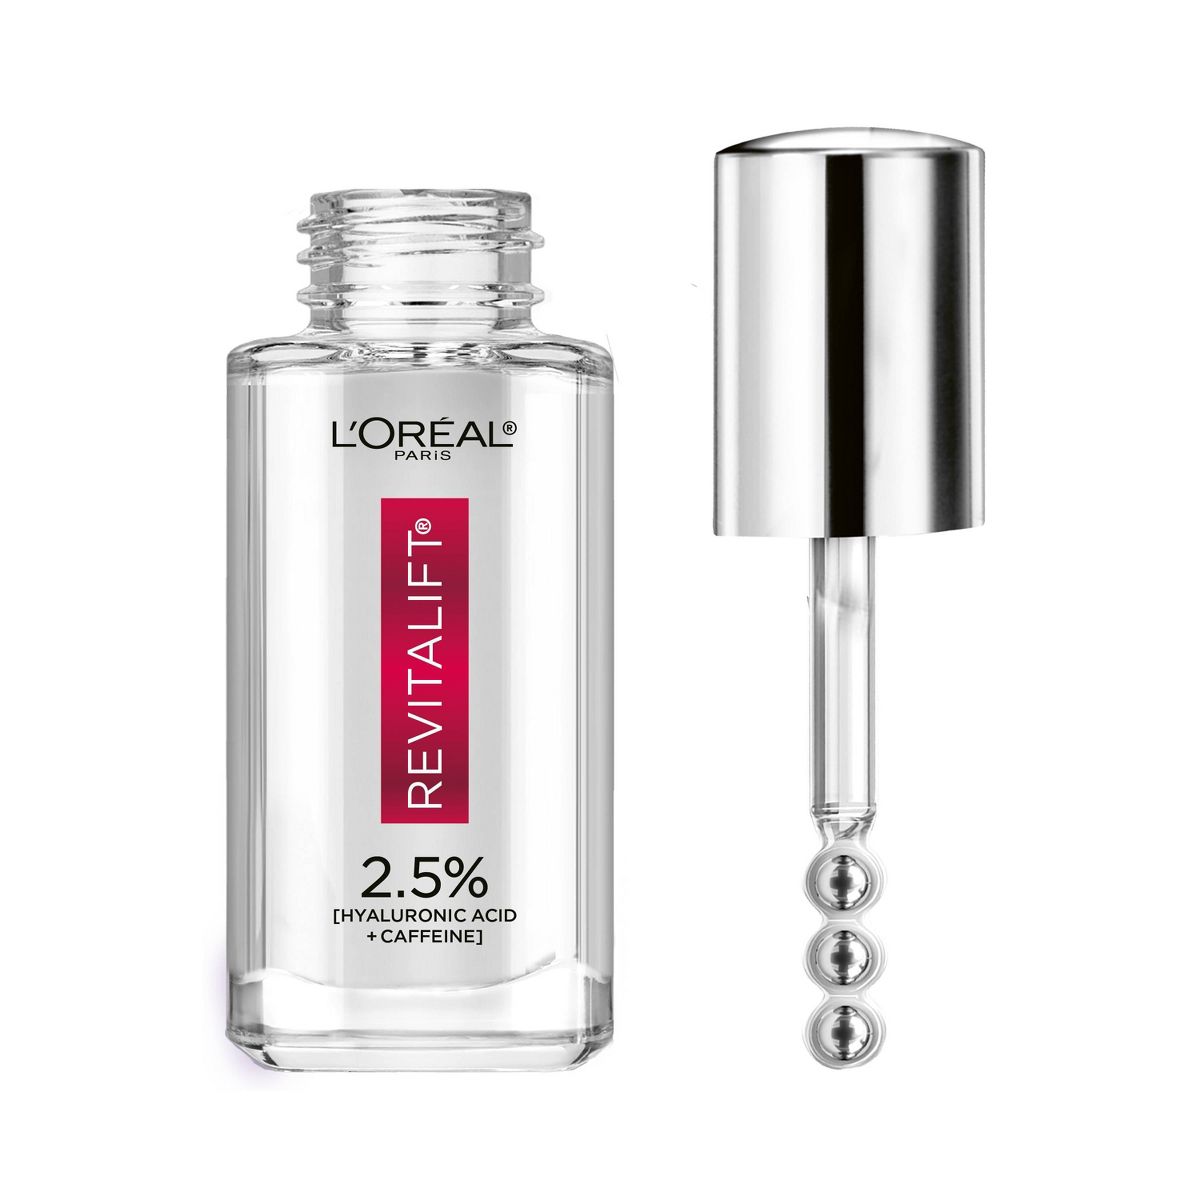 L'Oreal Paris Revitalift Derm Intensives Hyaluronic Acid and Caffeine Eye Serum - 0.67 fl oz